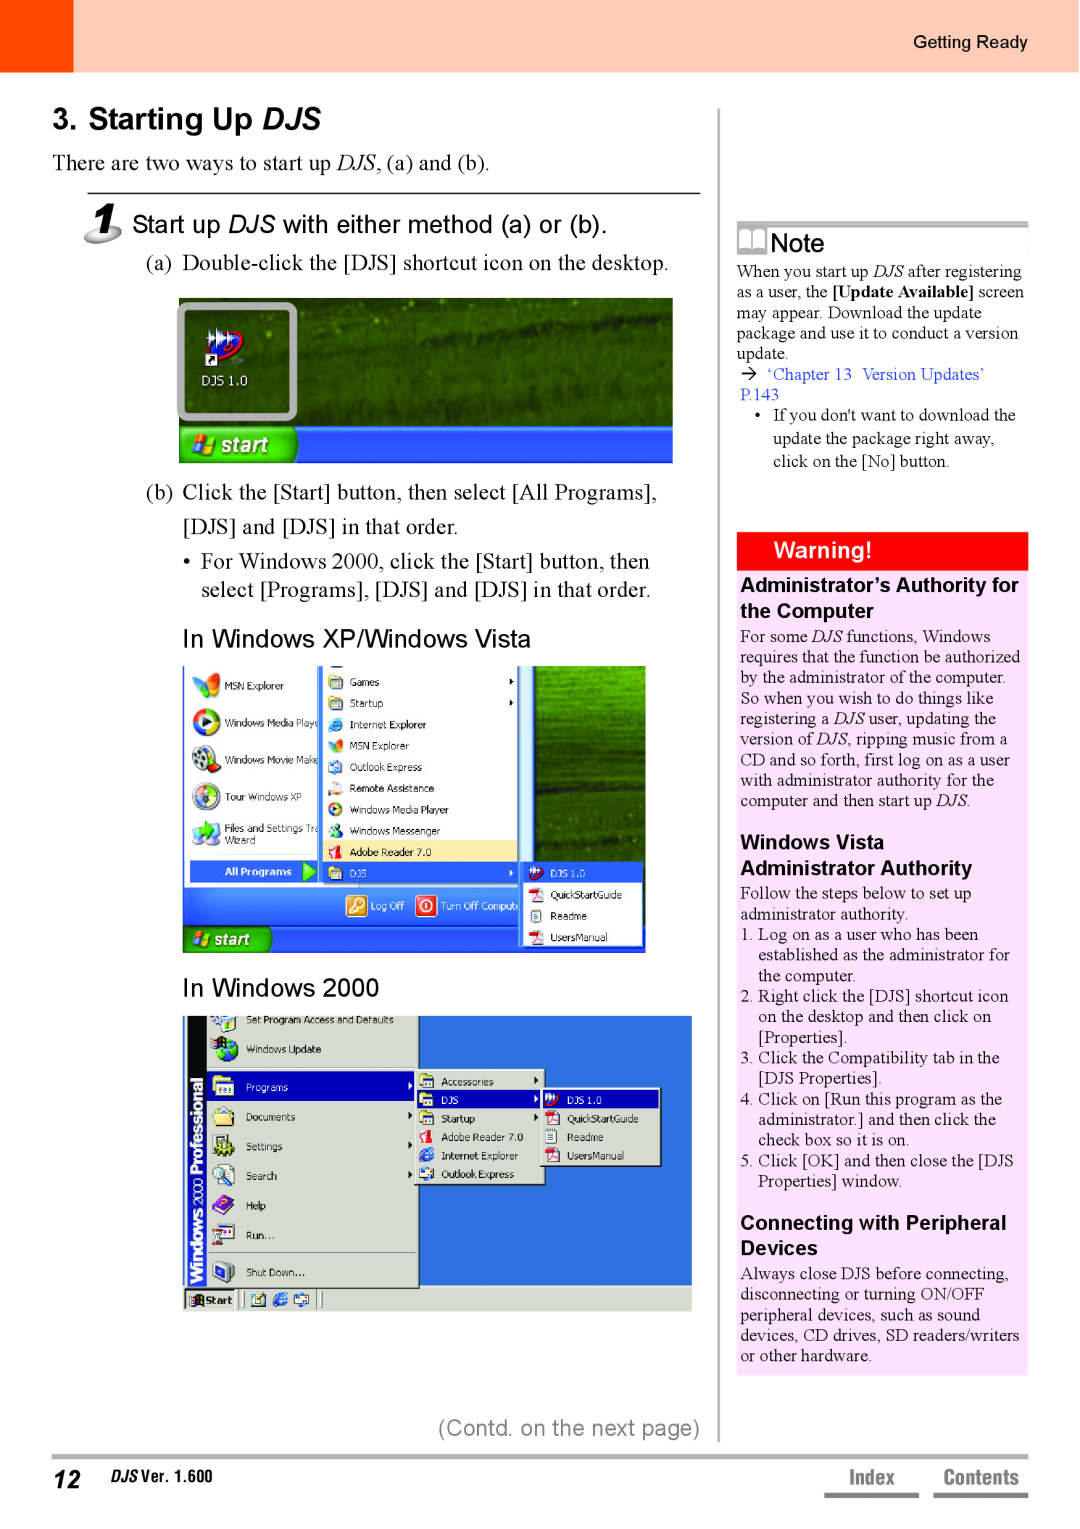 Pioneer SVJ-DL01 Starting Up DJS, Start up DJS with either method a or b, In Windows XP/Windows Vista In Windows, Index 